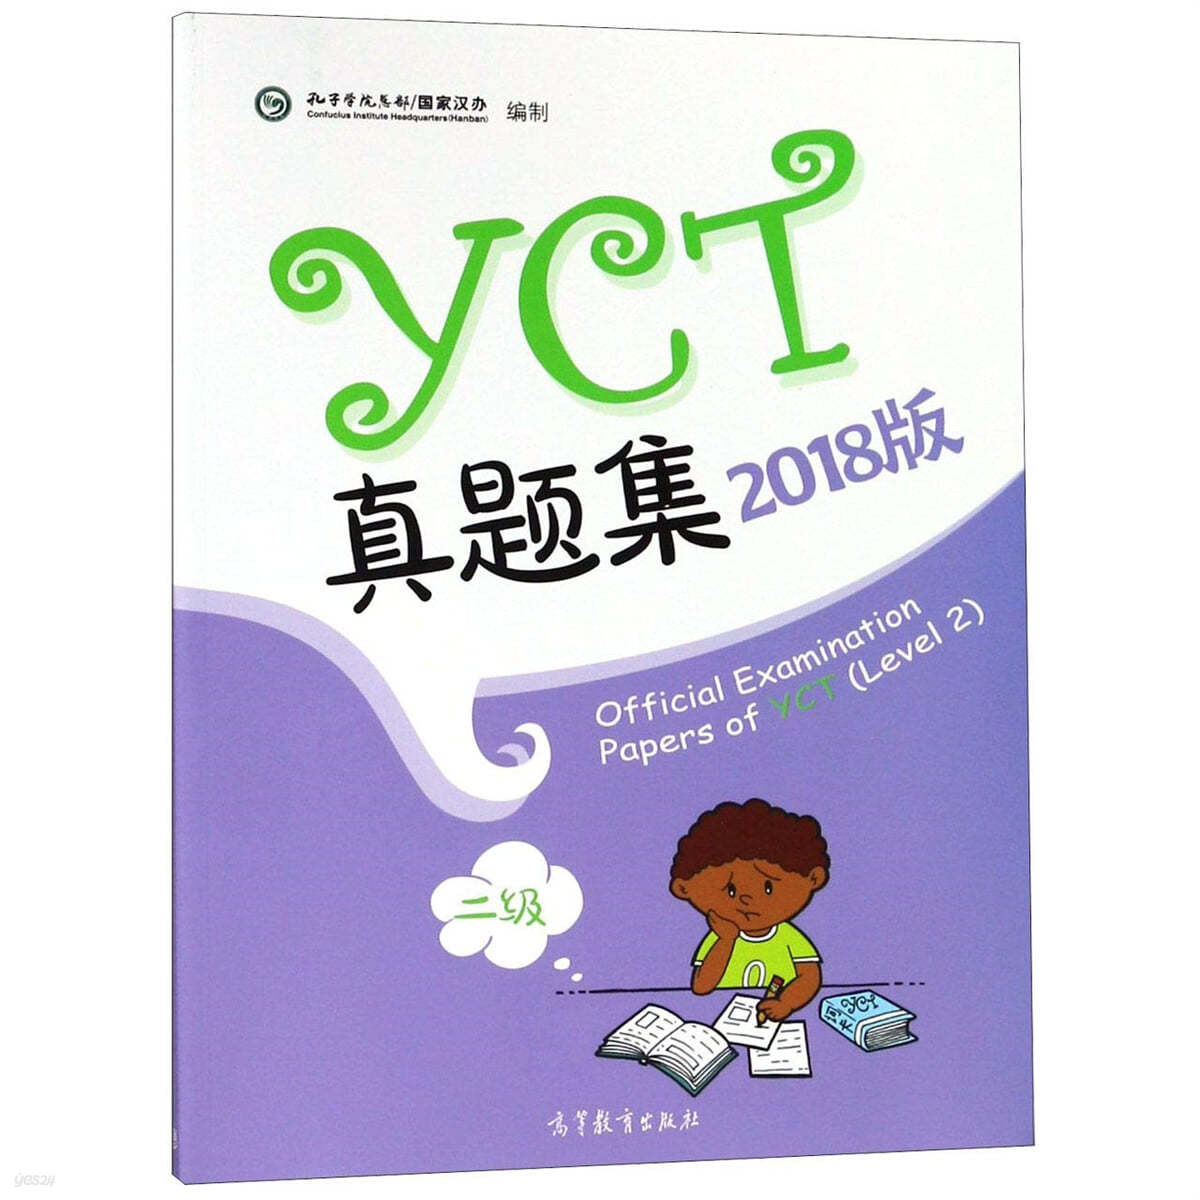 YCT?題集(二級)(2018版)